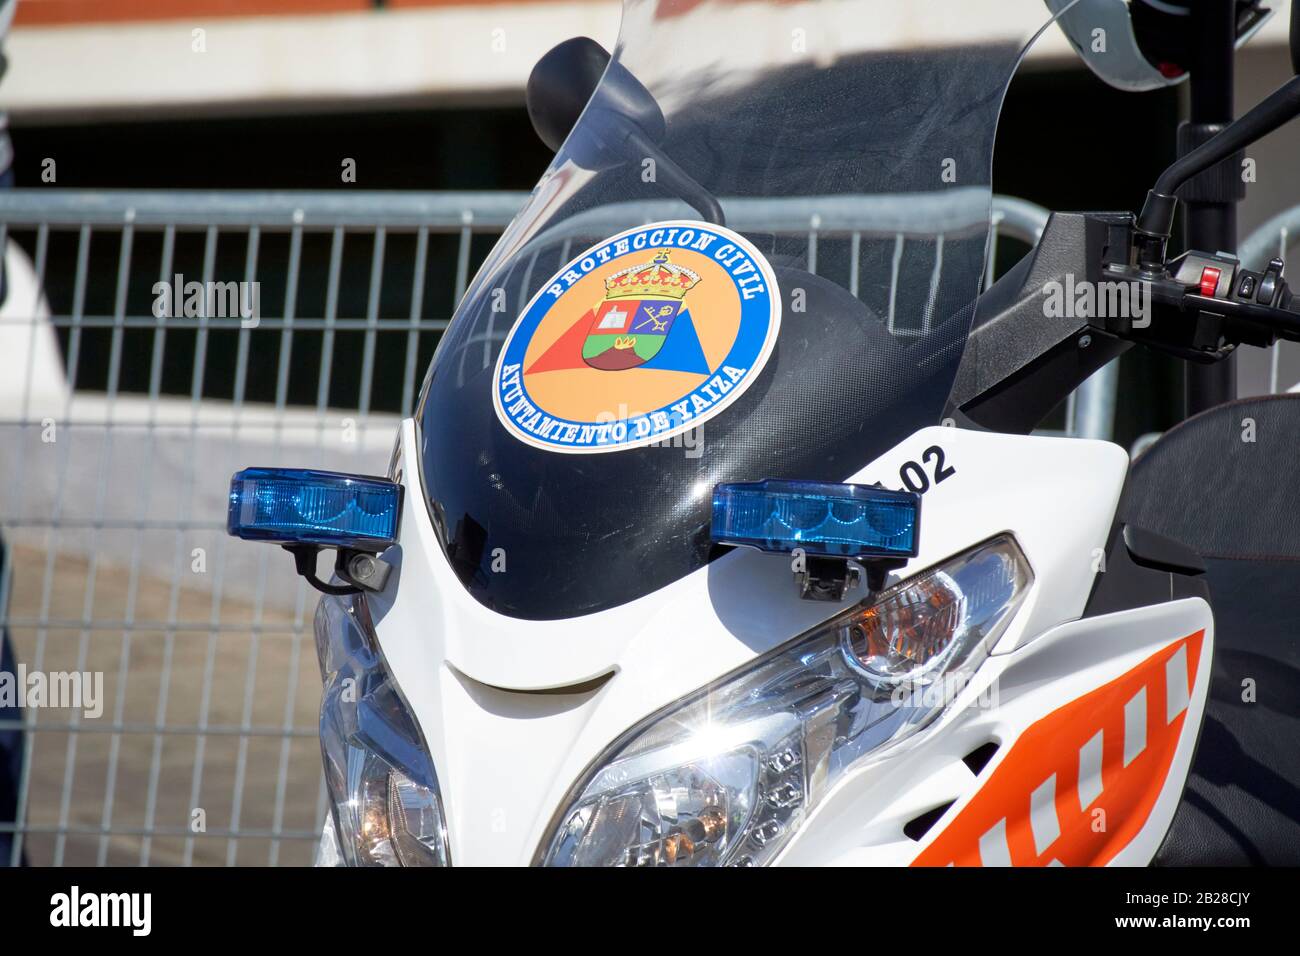 proteccion civil civil defence vehicle ayuntamiento de yaiza spanish response moped scooter local Lanzarote canary islands spain Stock Photo